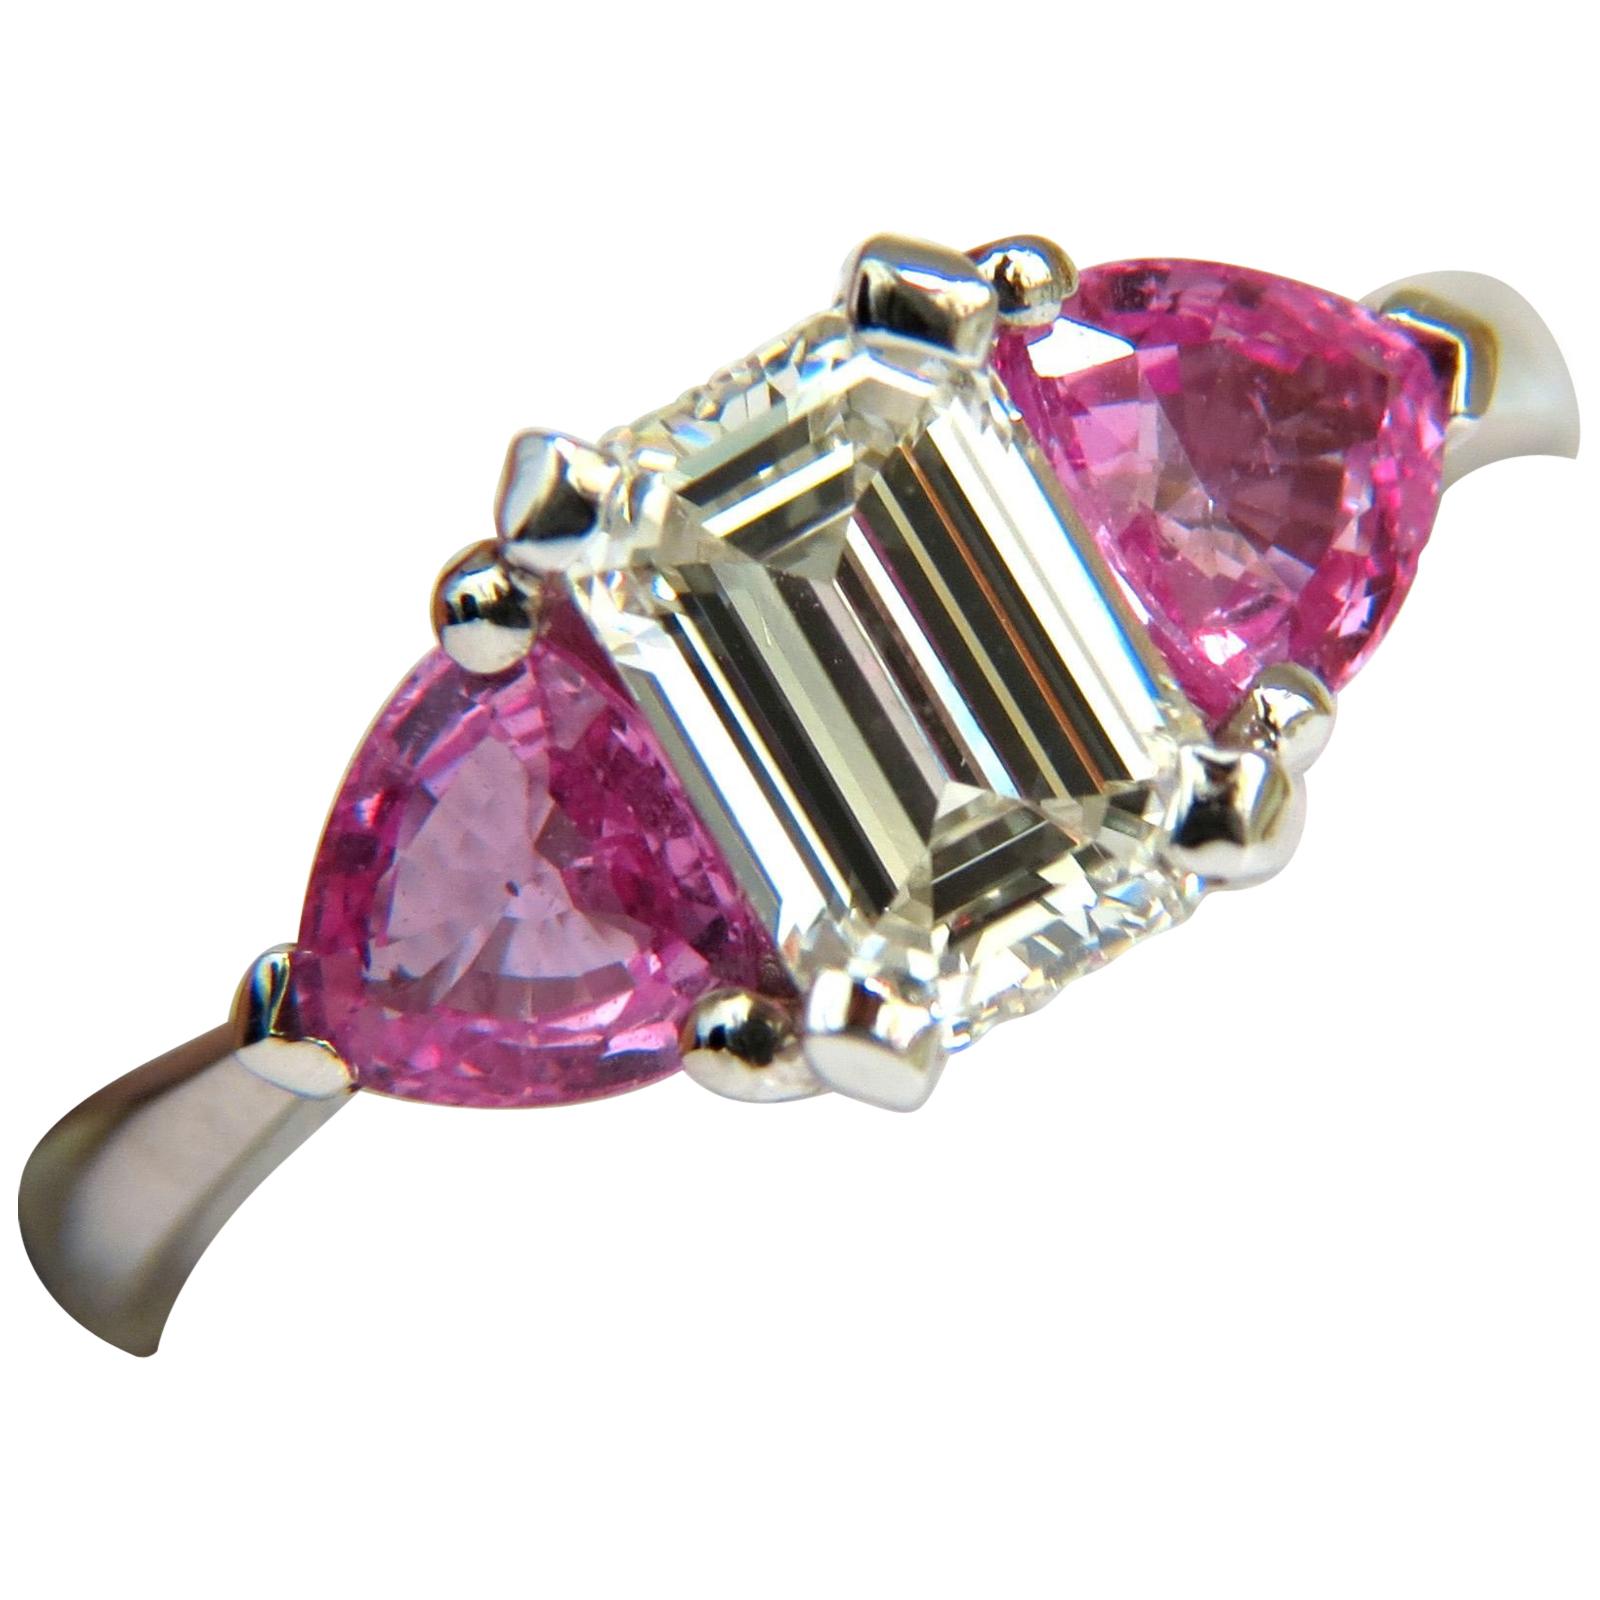 3.18 Carat Natural Emerald Cut Diamond Pink Sapphire Ring 14 Karat